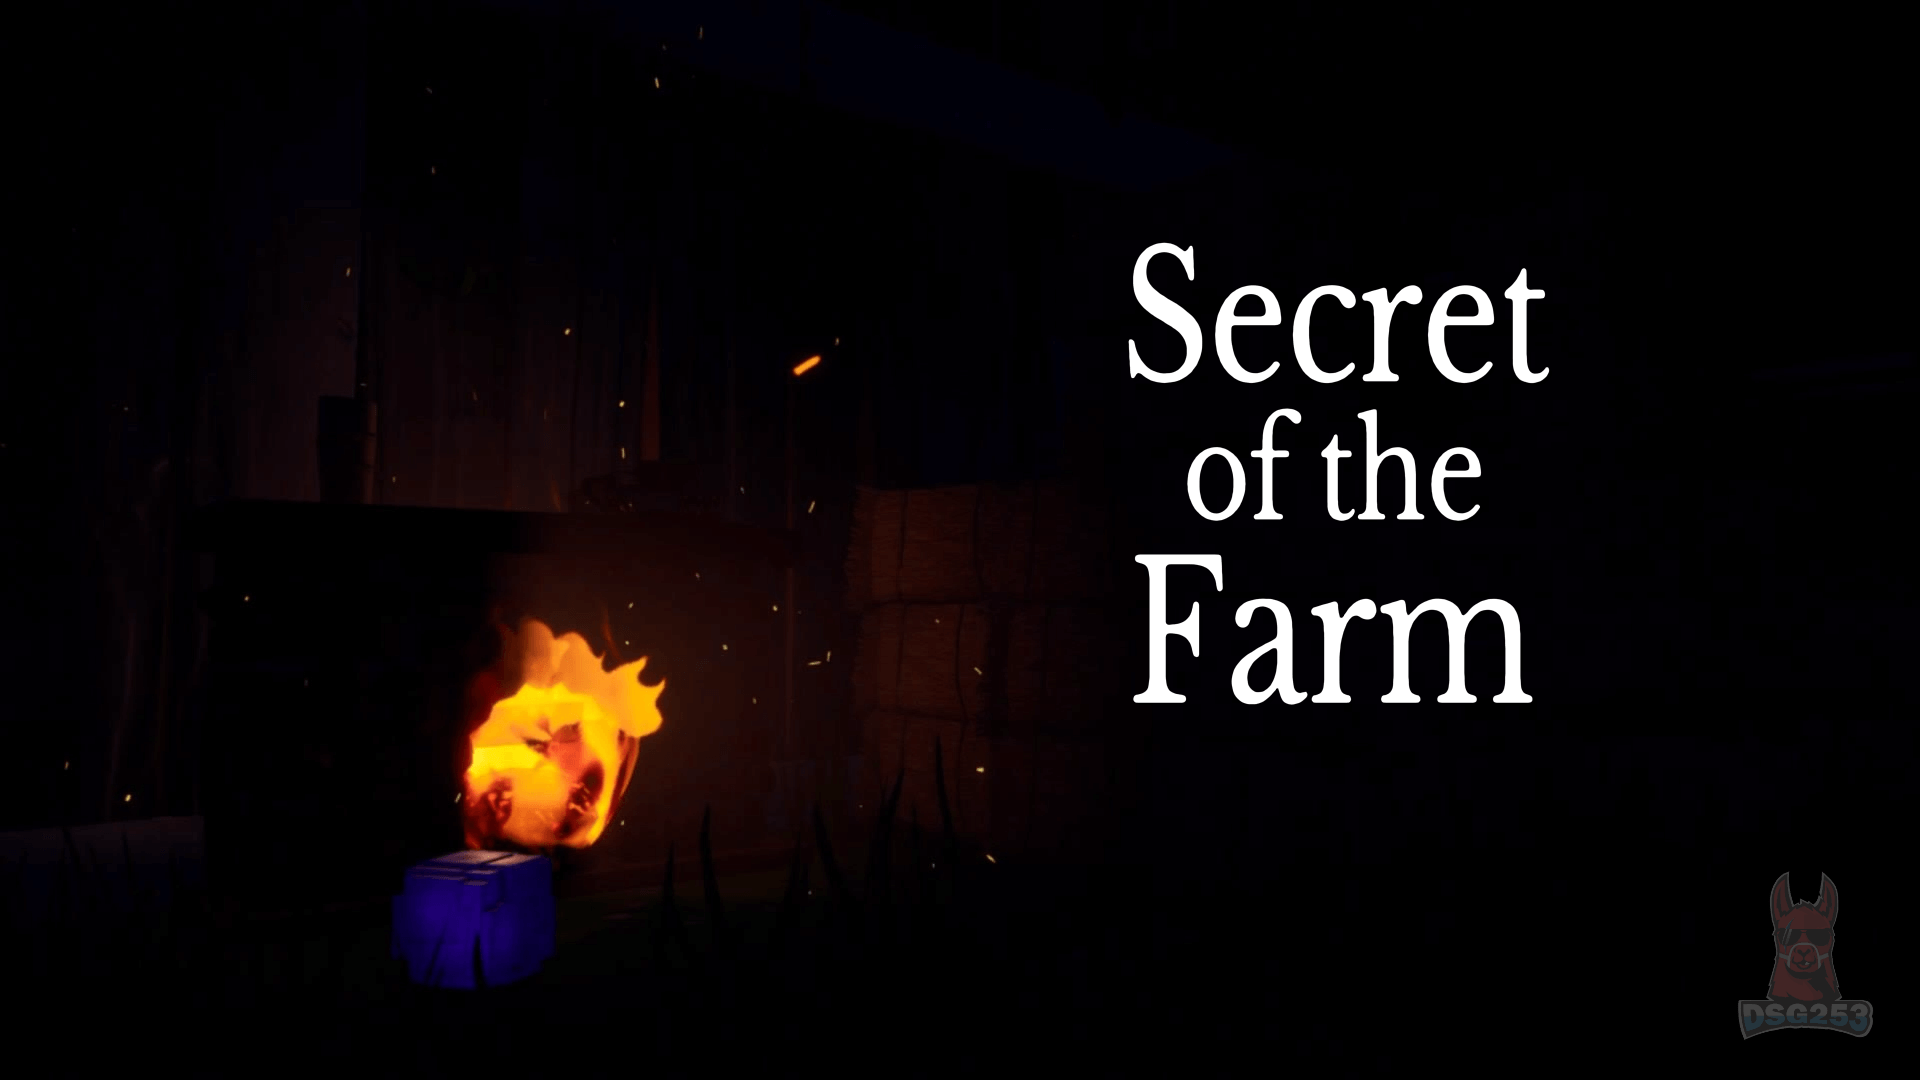 SECRET OF THE FARM image 3